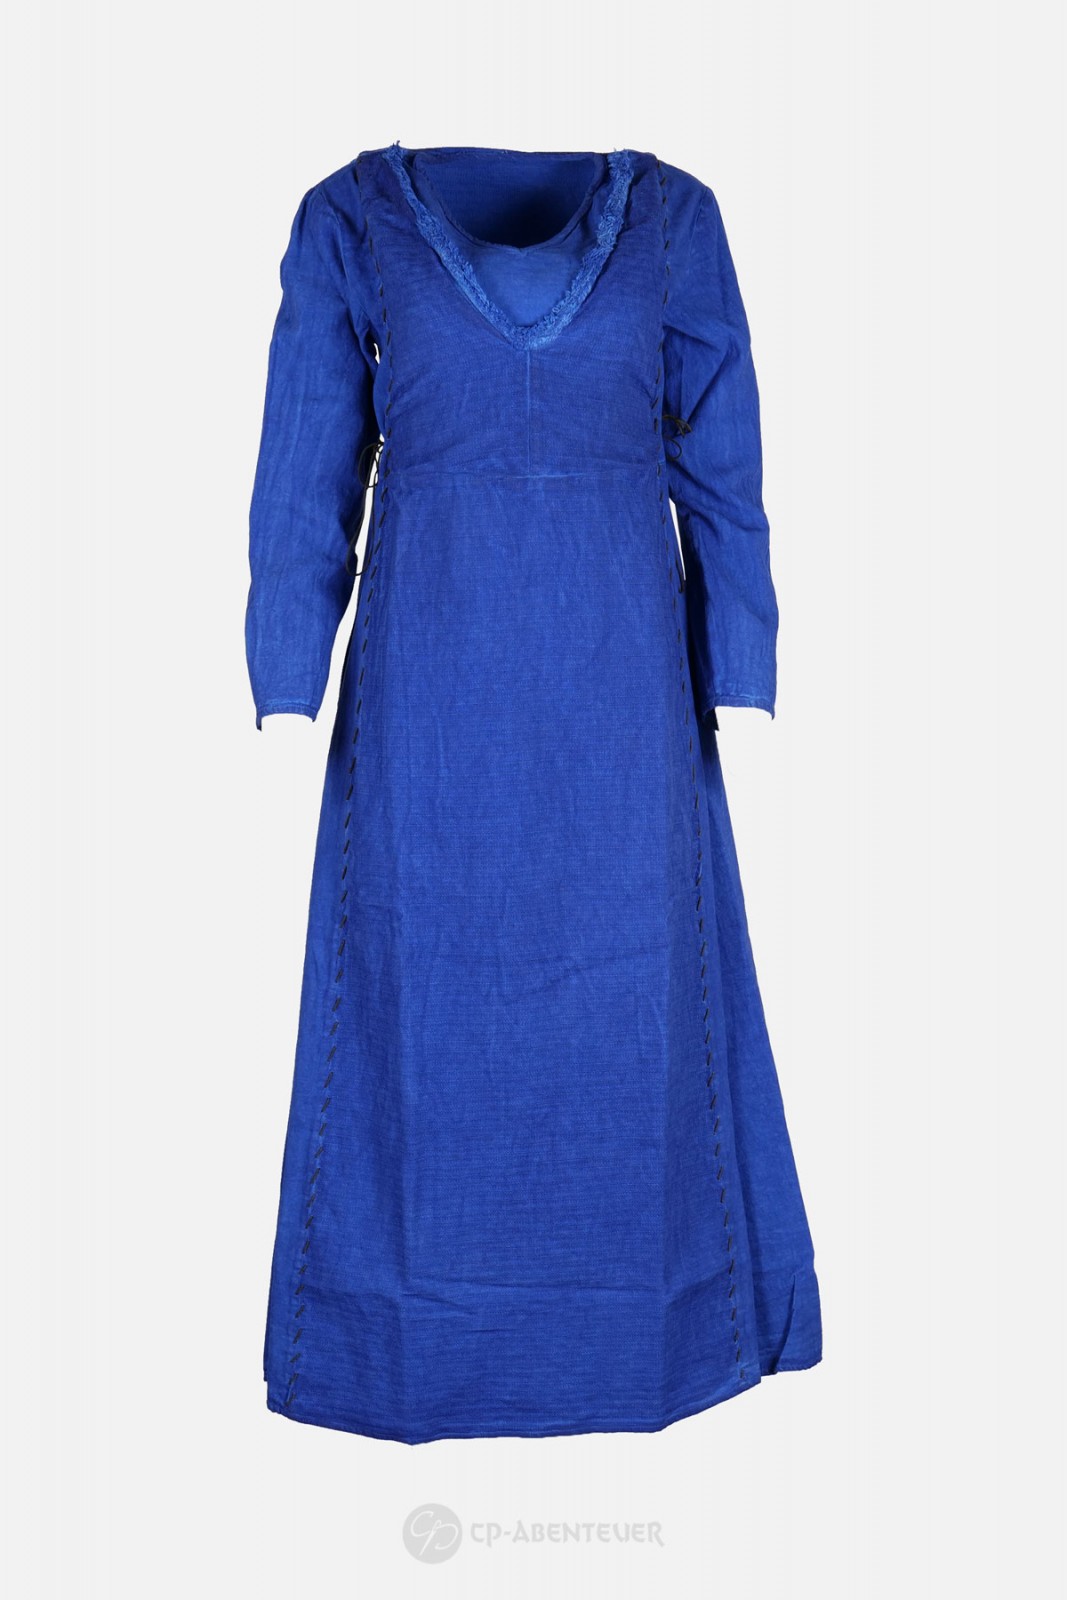 Lagertha - Kleid blau